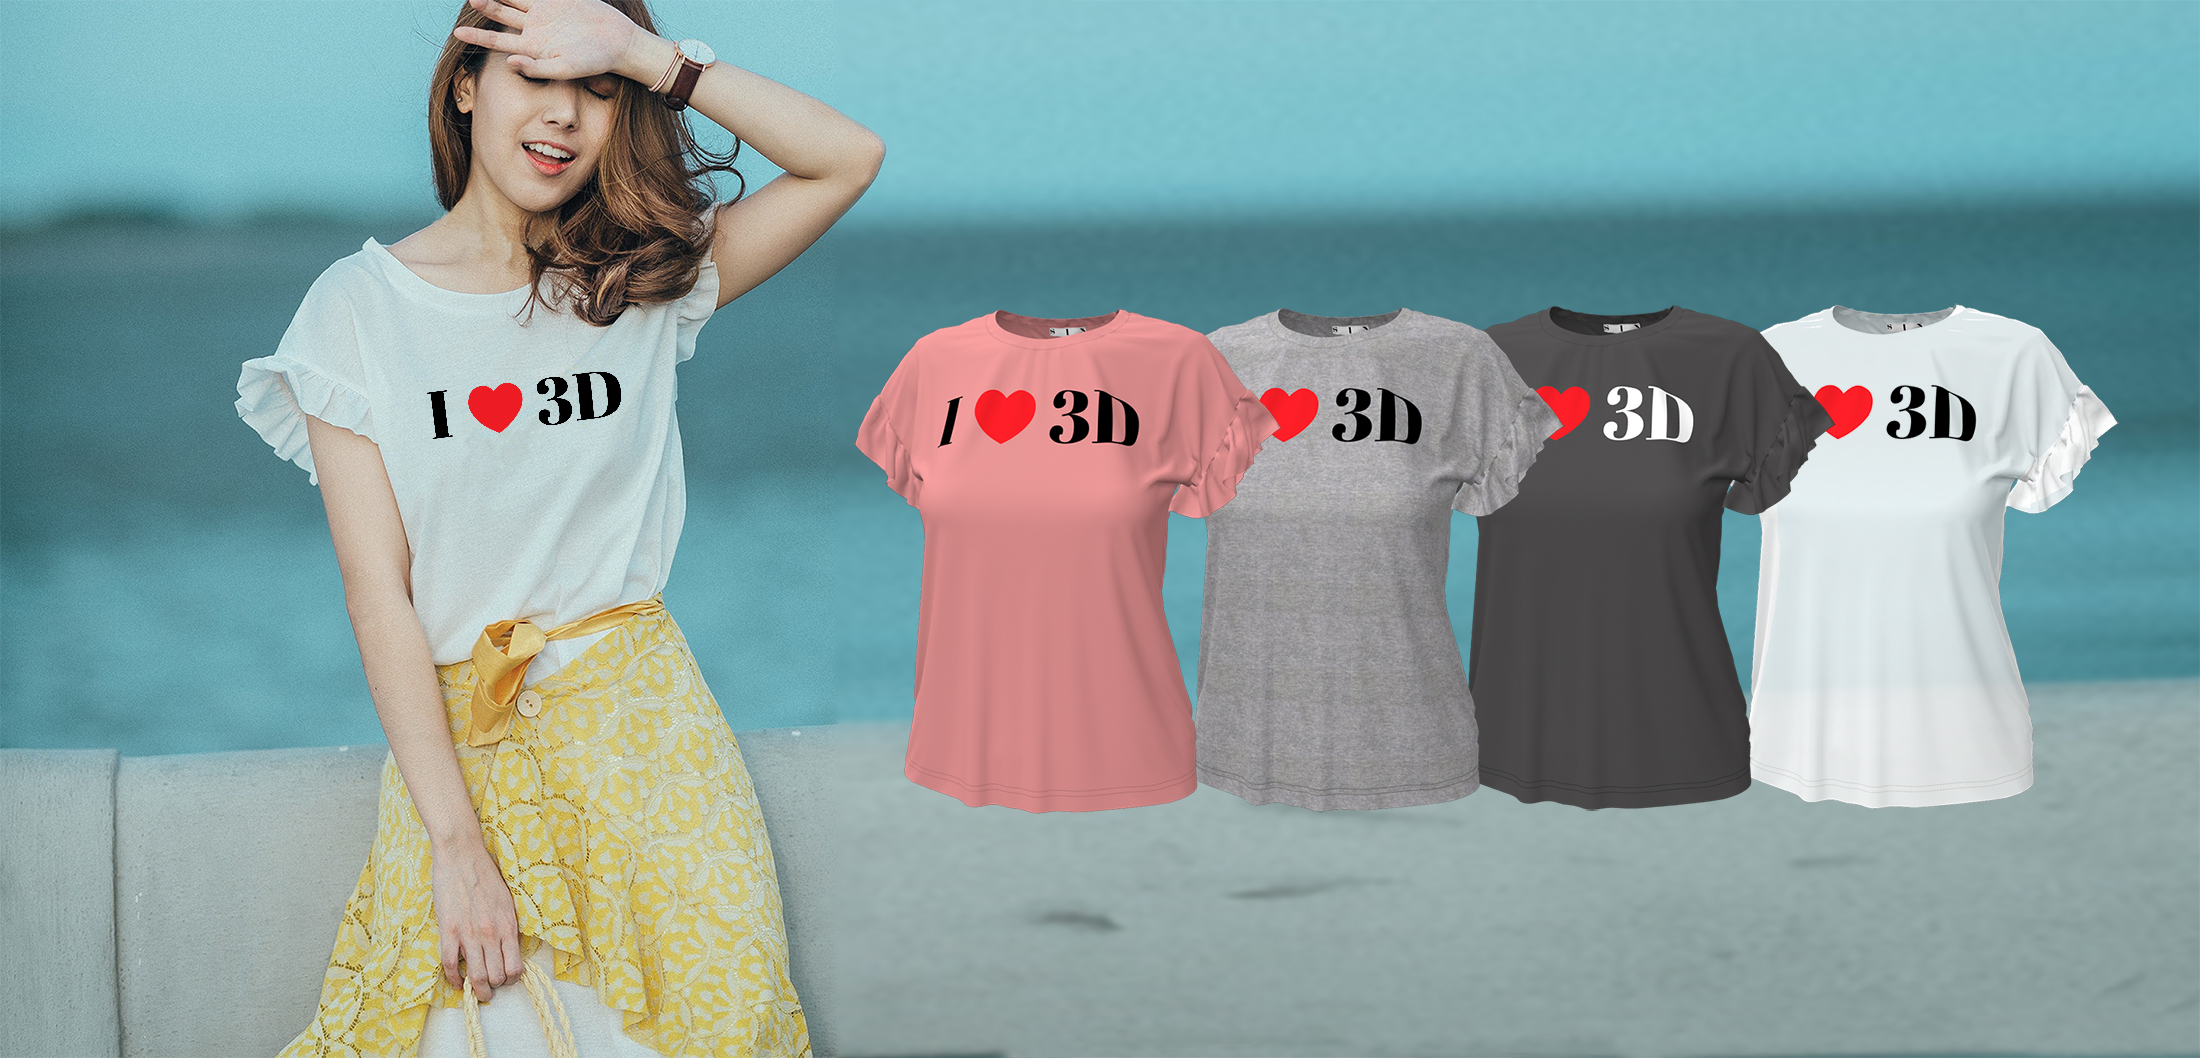 3D clothing_3D technology